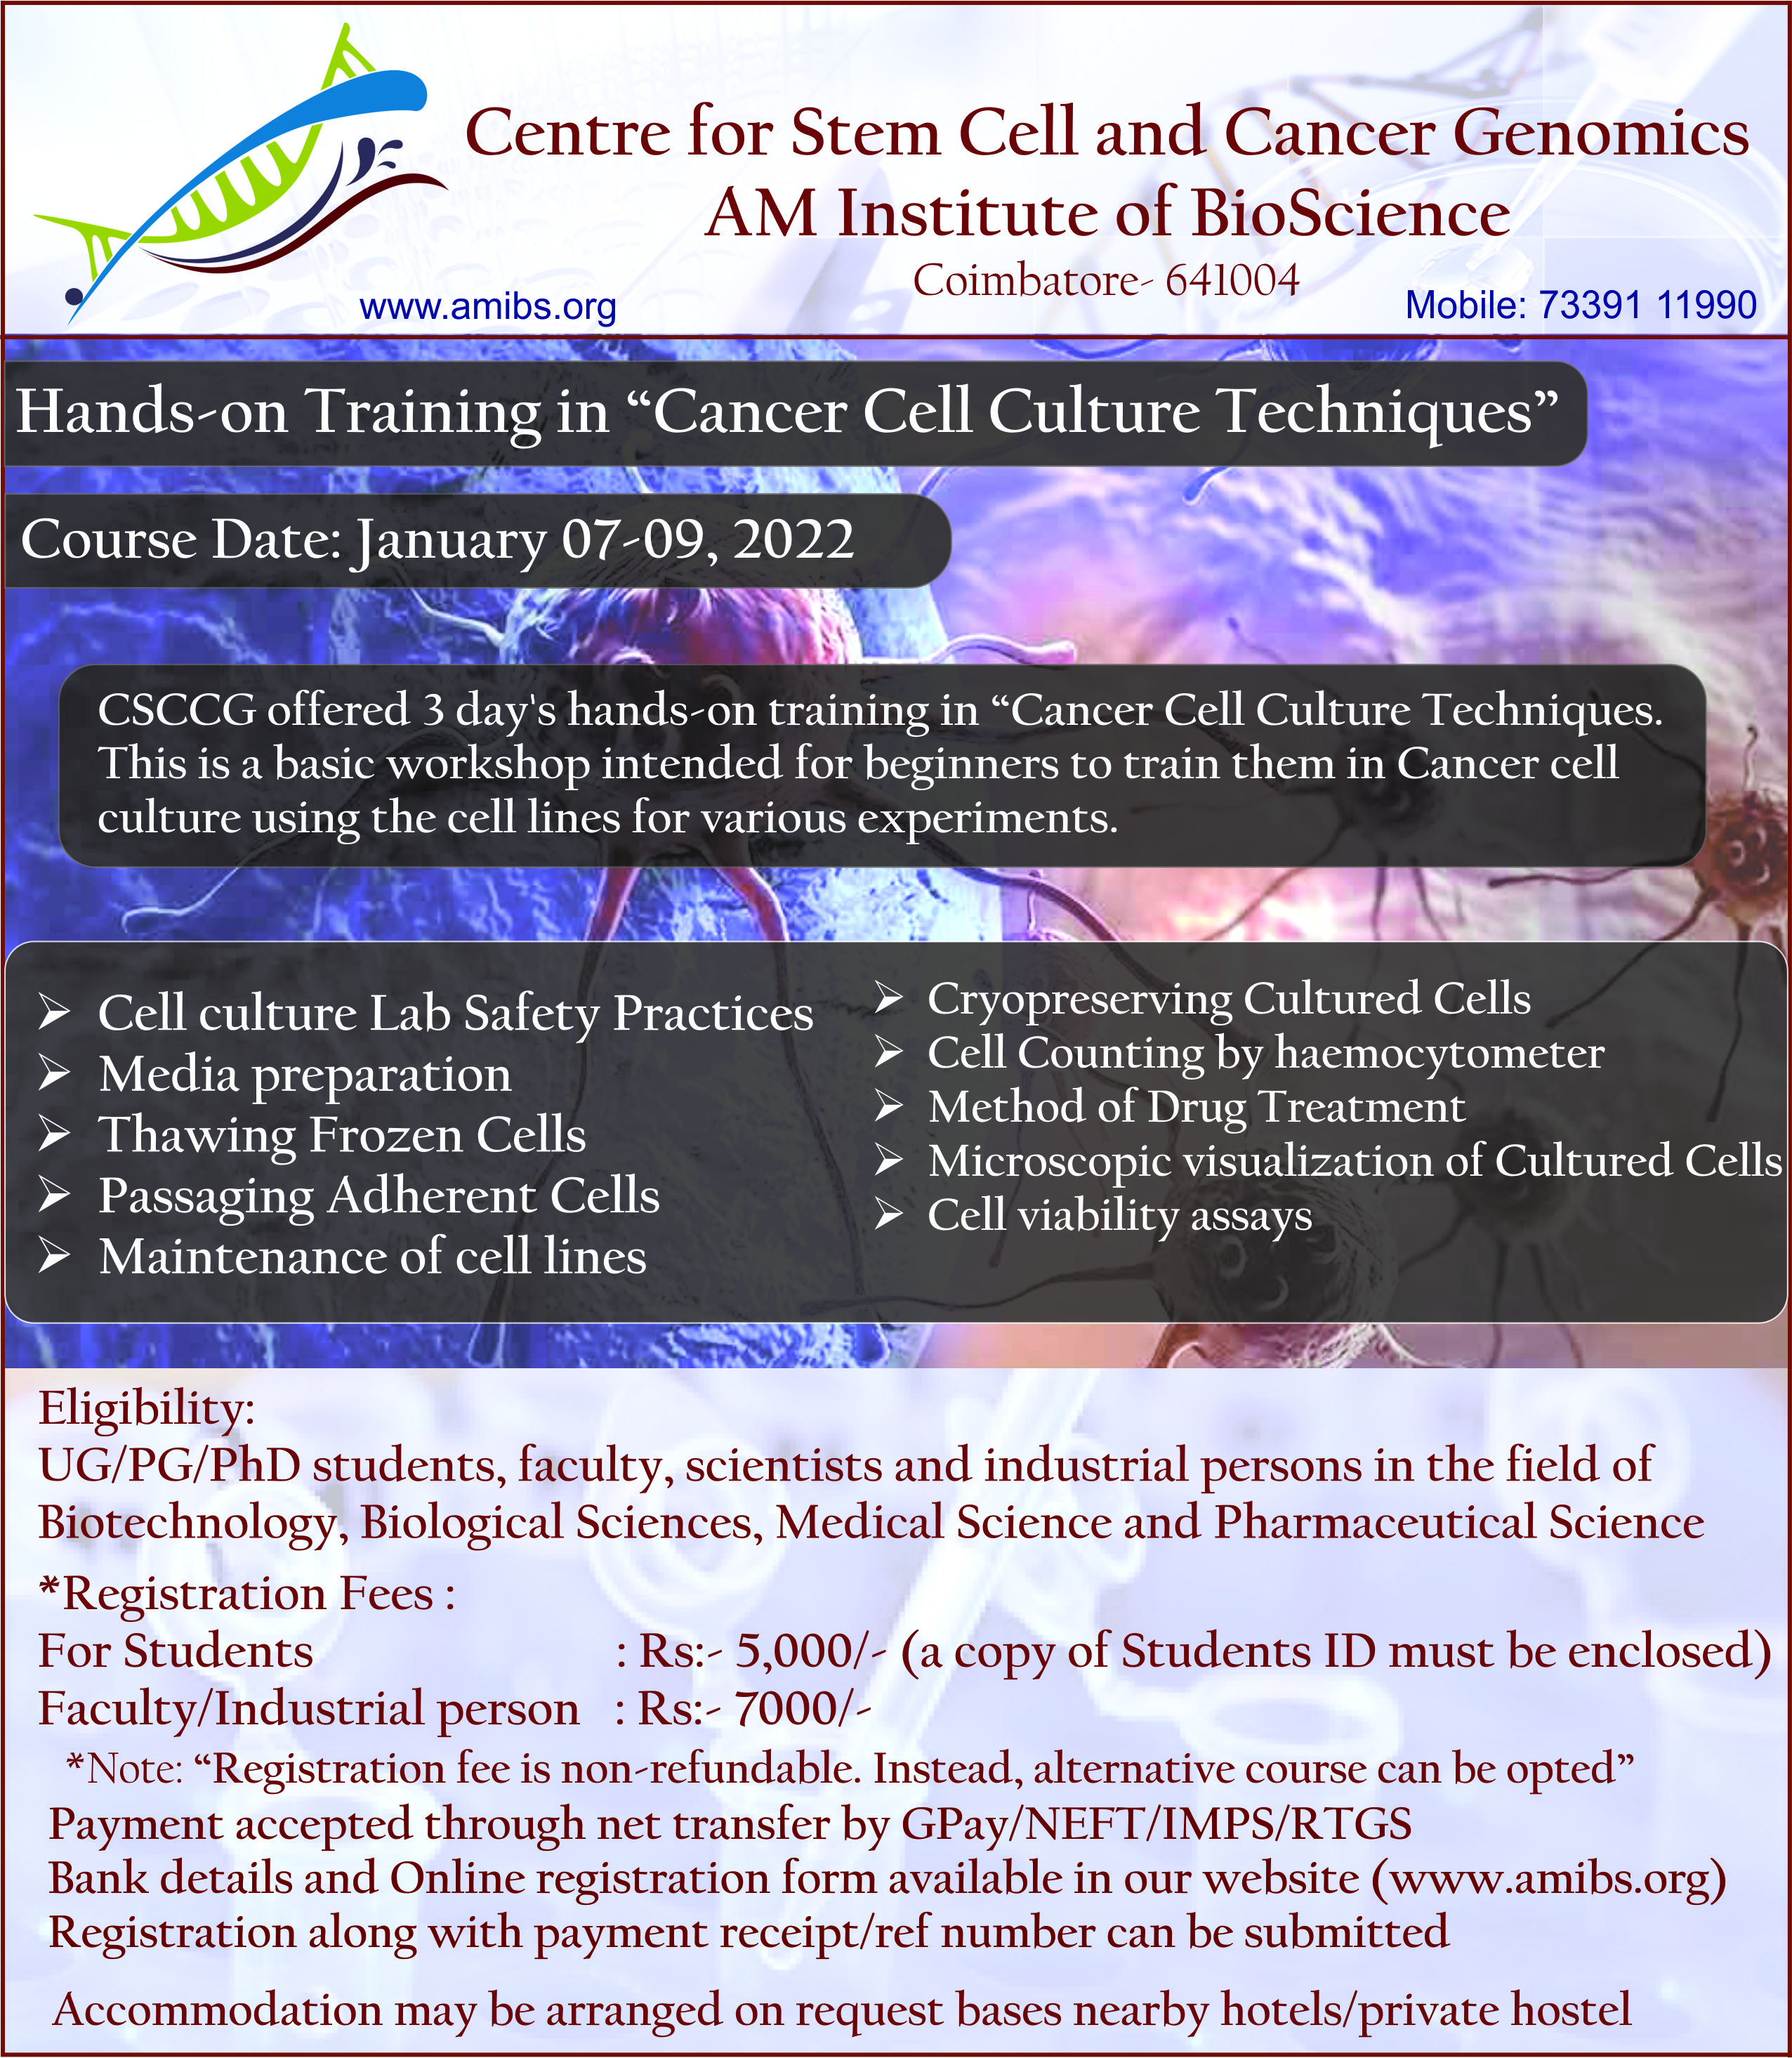 Centre for Stem Cell & Cancer Genomics, AMI BioScience - Home